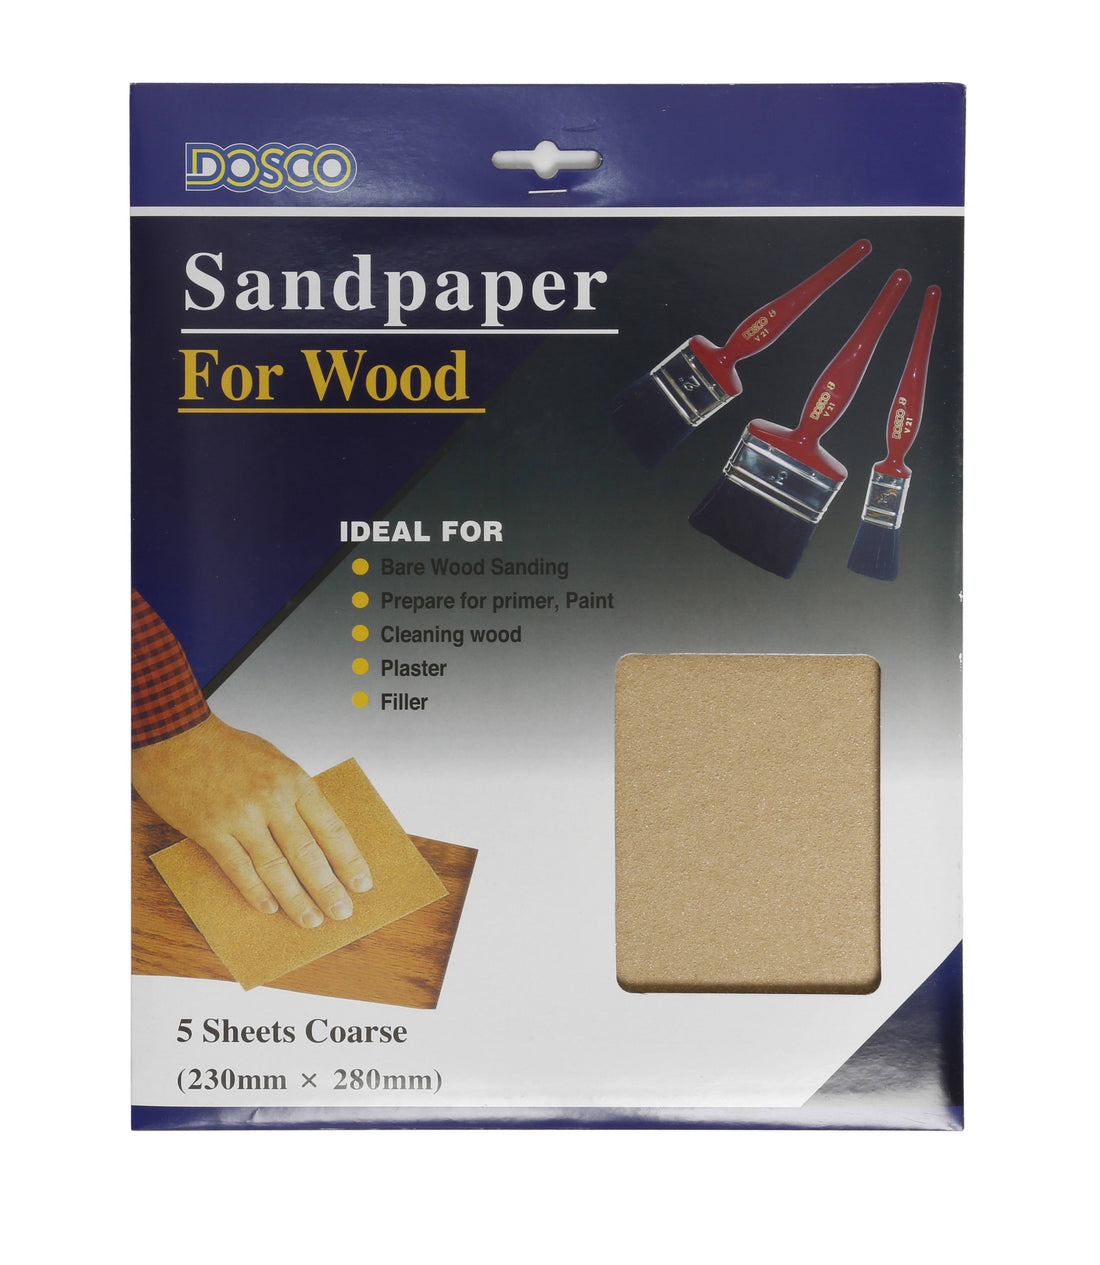 Dosco Sandpaper For Wood 5 Sheets Coarse